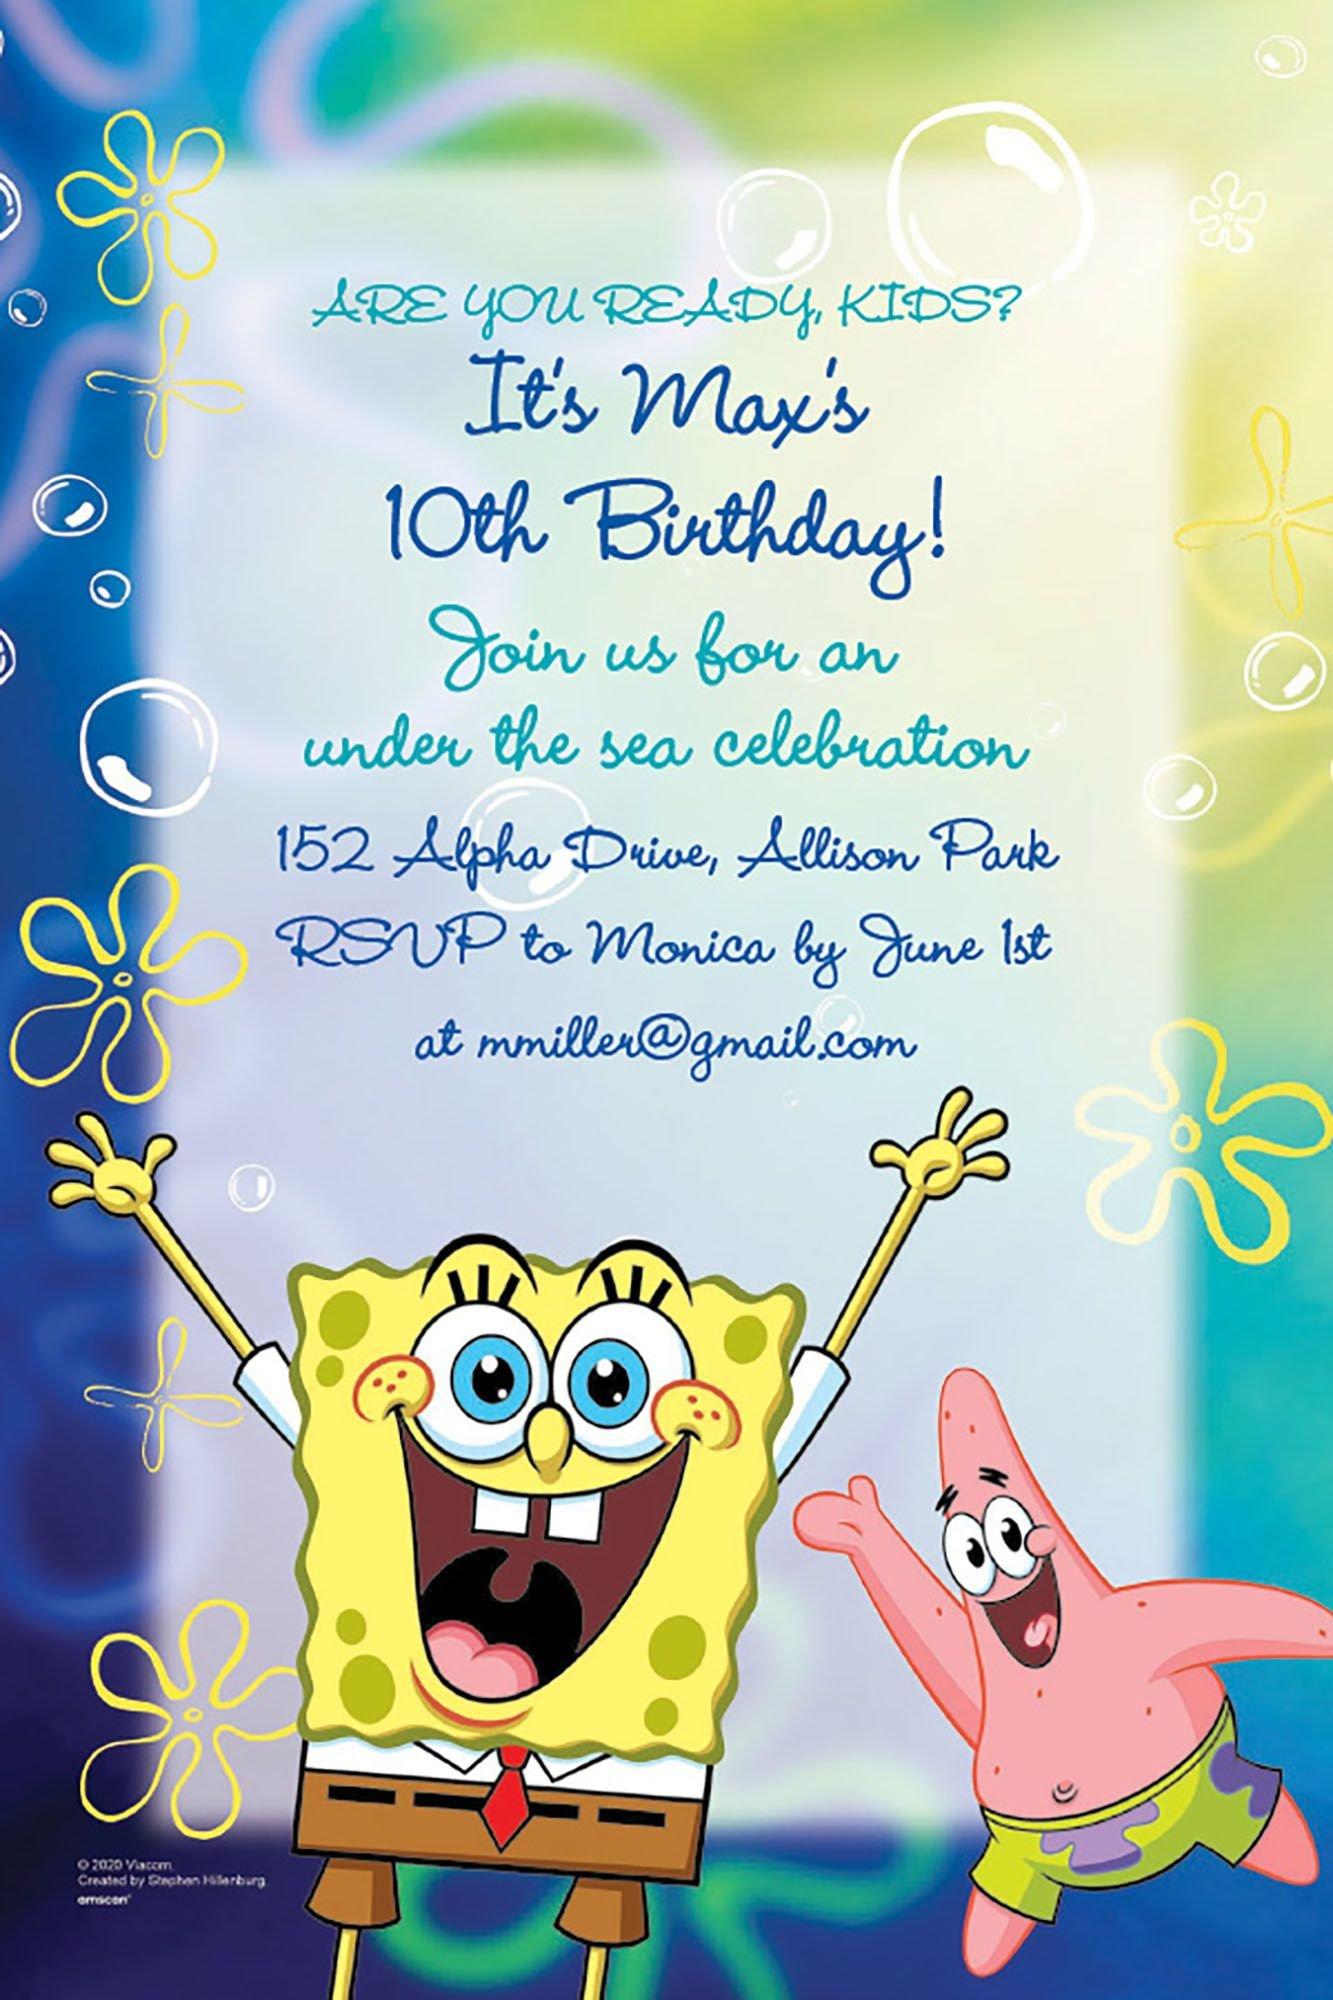 Party City Custom Spongebob SquarePants Invitations Size 4in x 6in Birthday Party